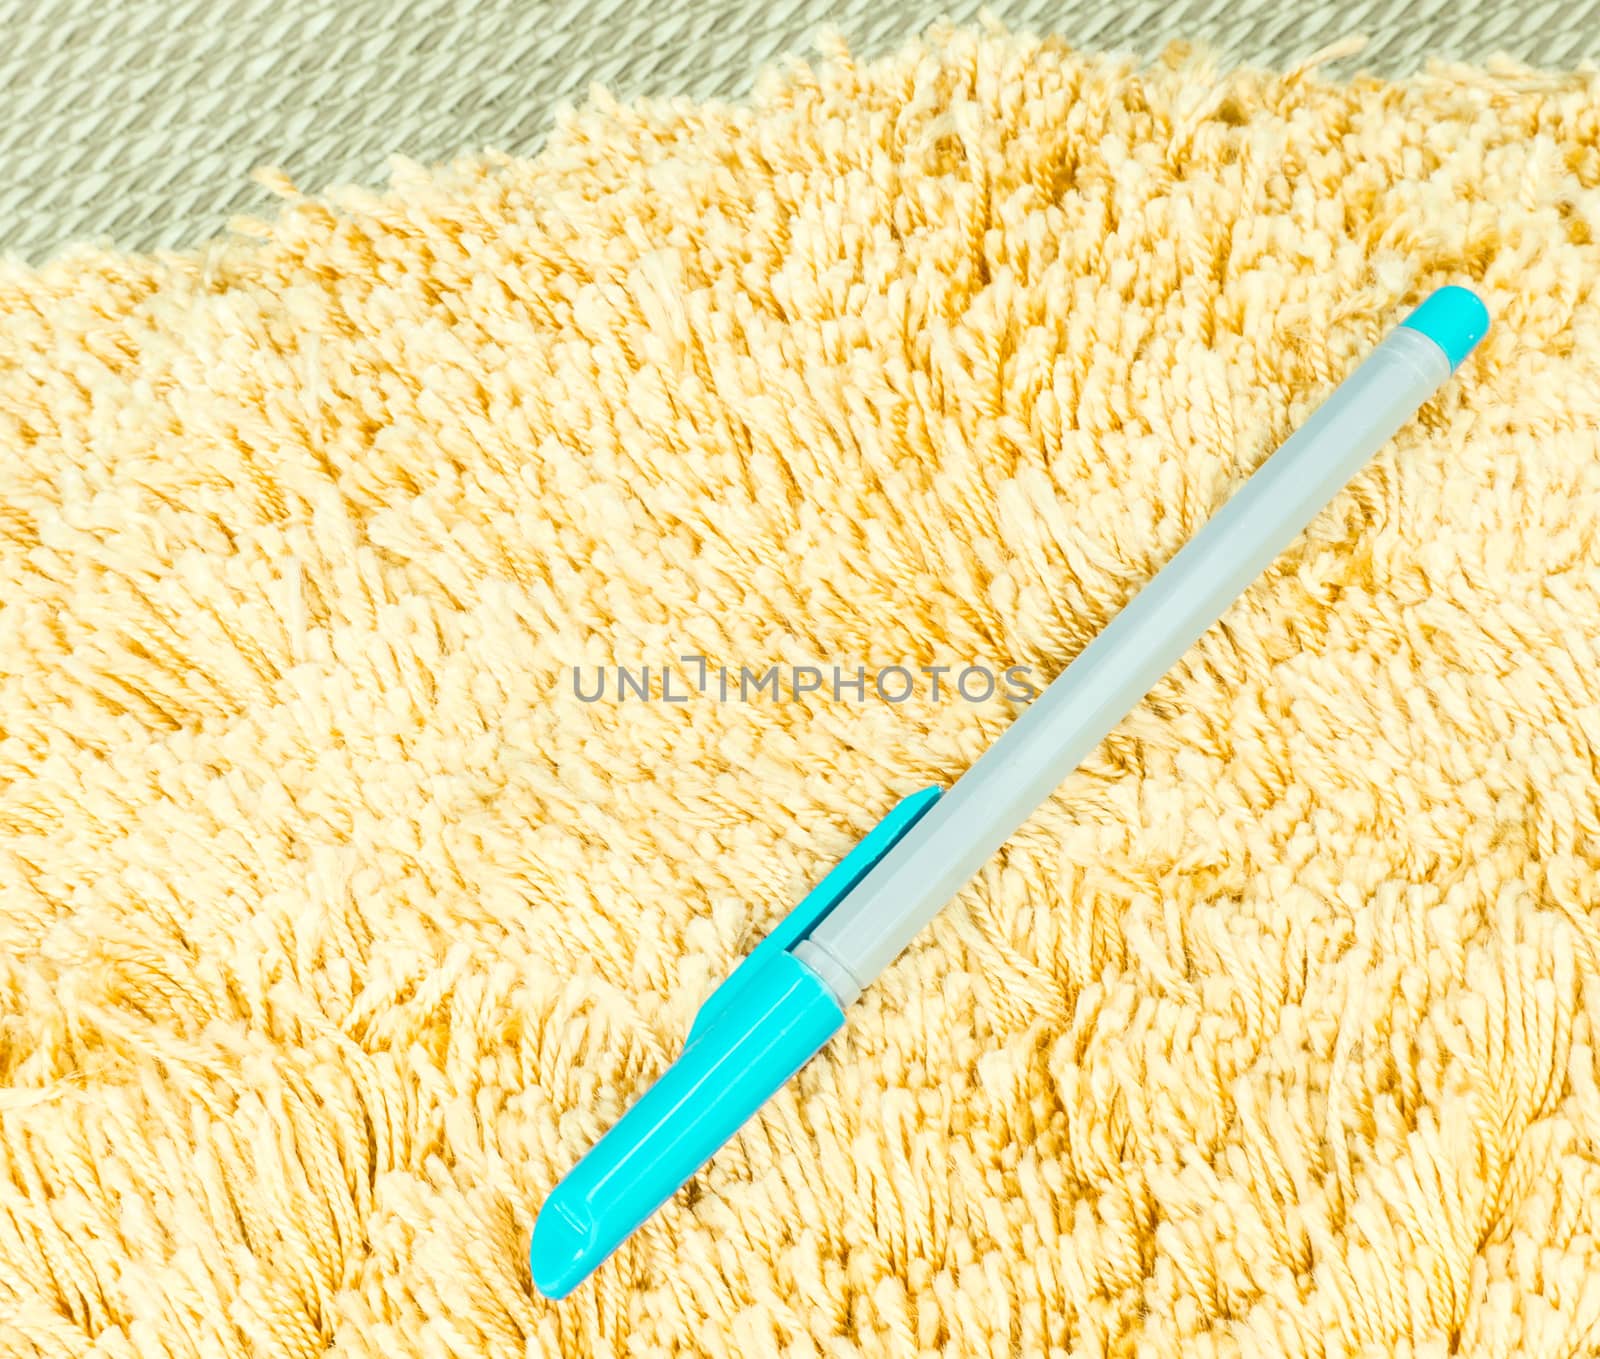 Blue Pen on Orange Hair Fur Carpet on a Mat